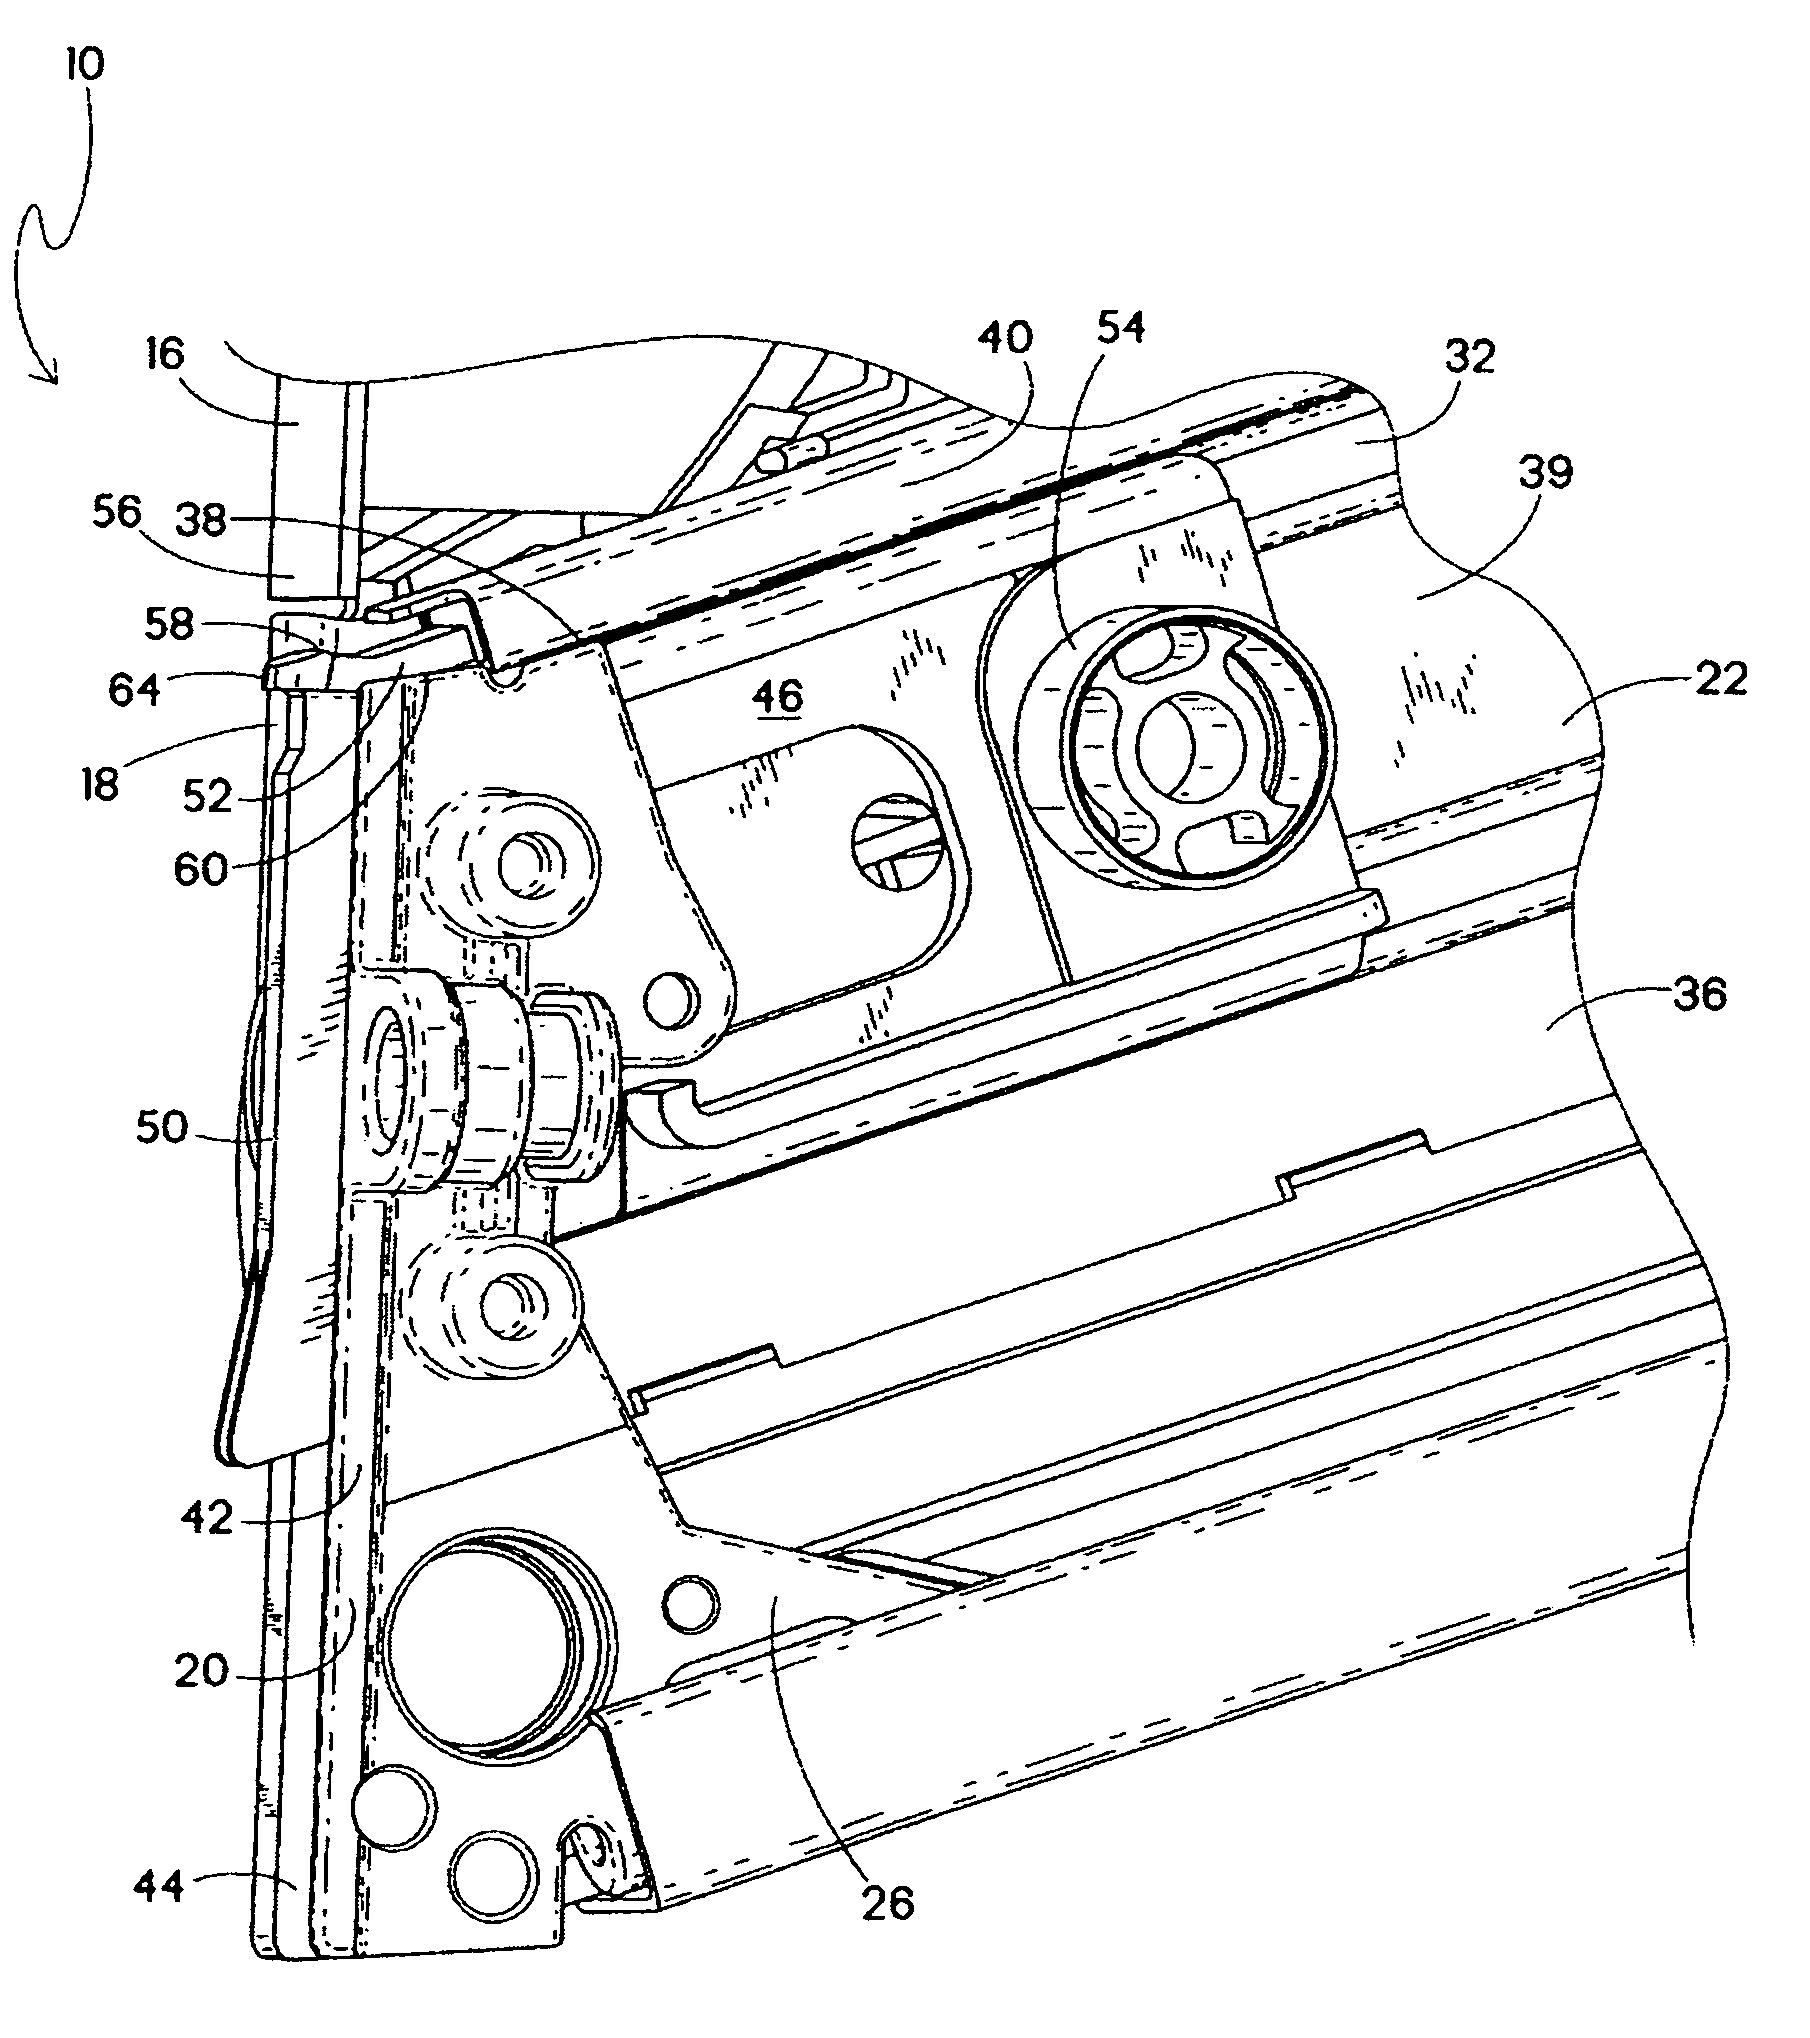 Power nailer with driver blade blocking mechanism magazine